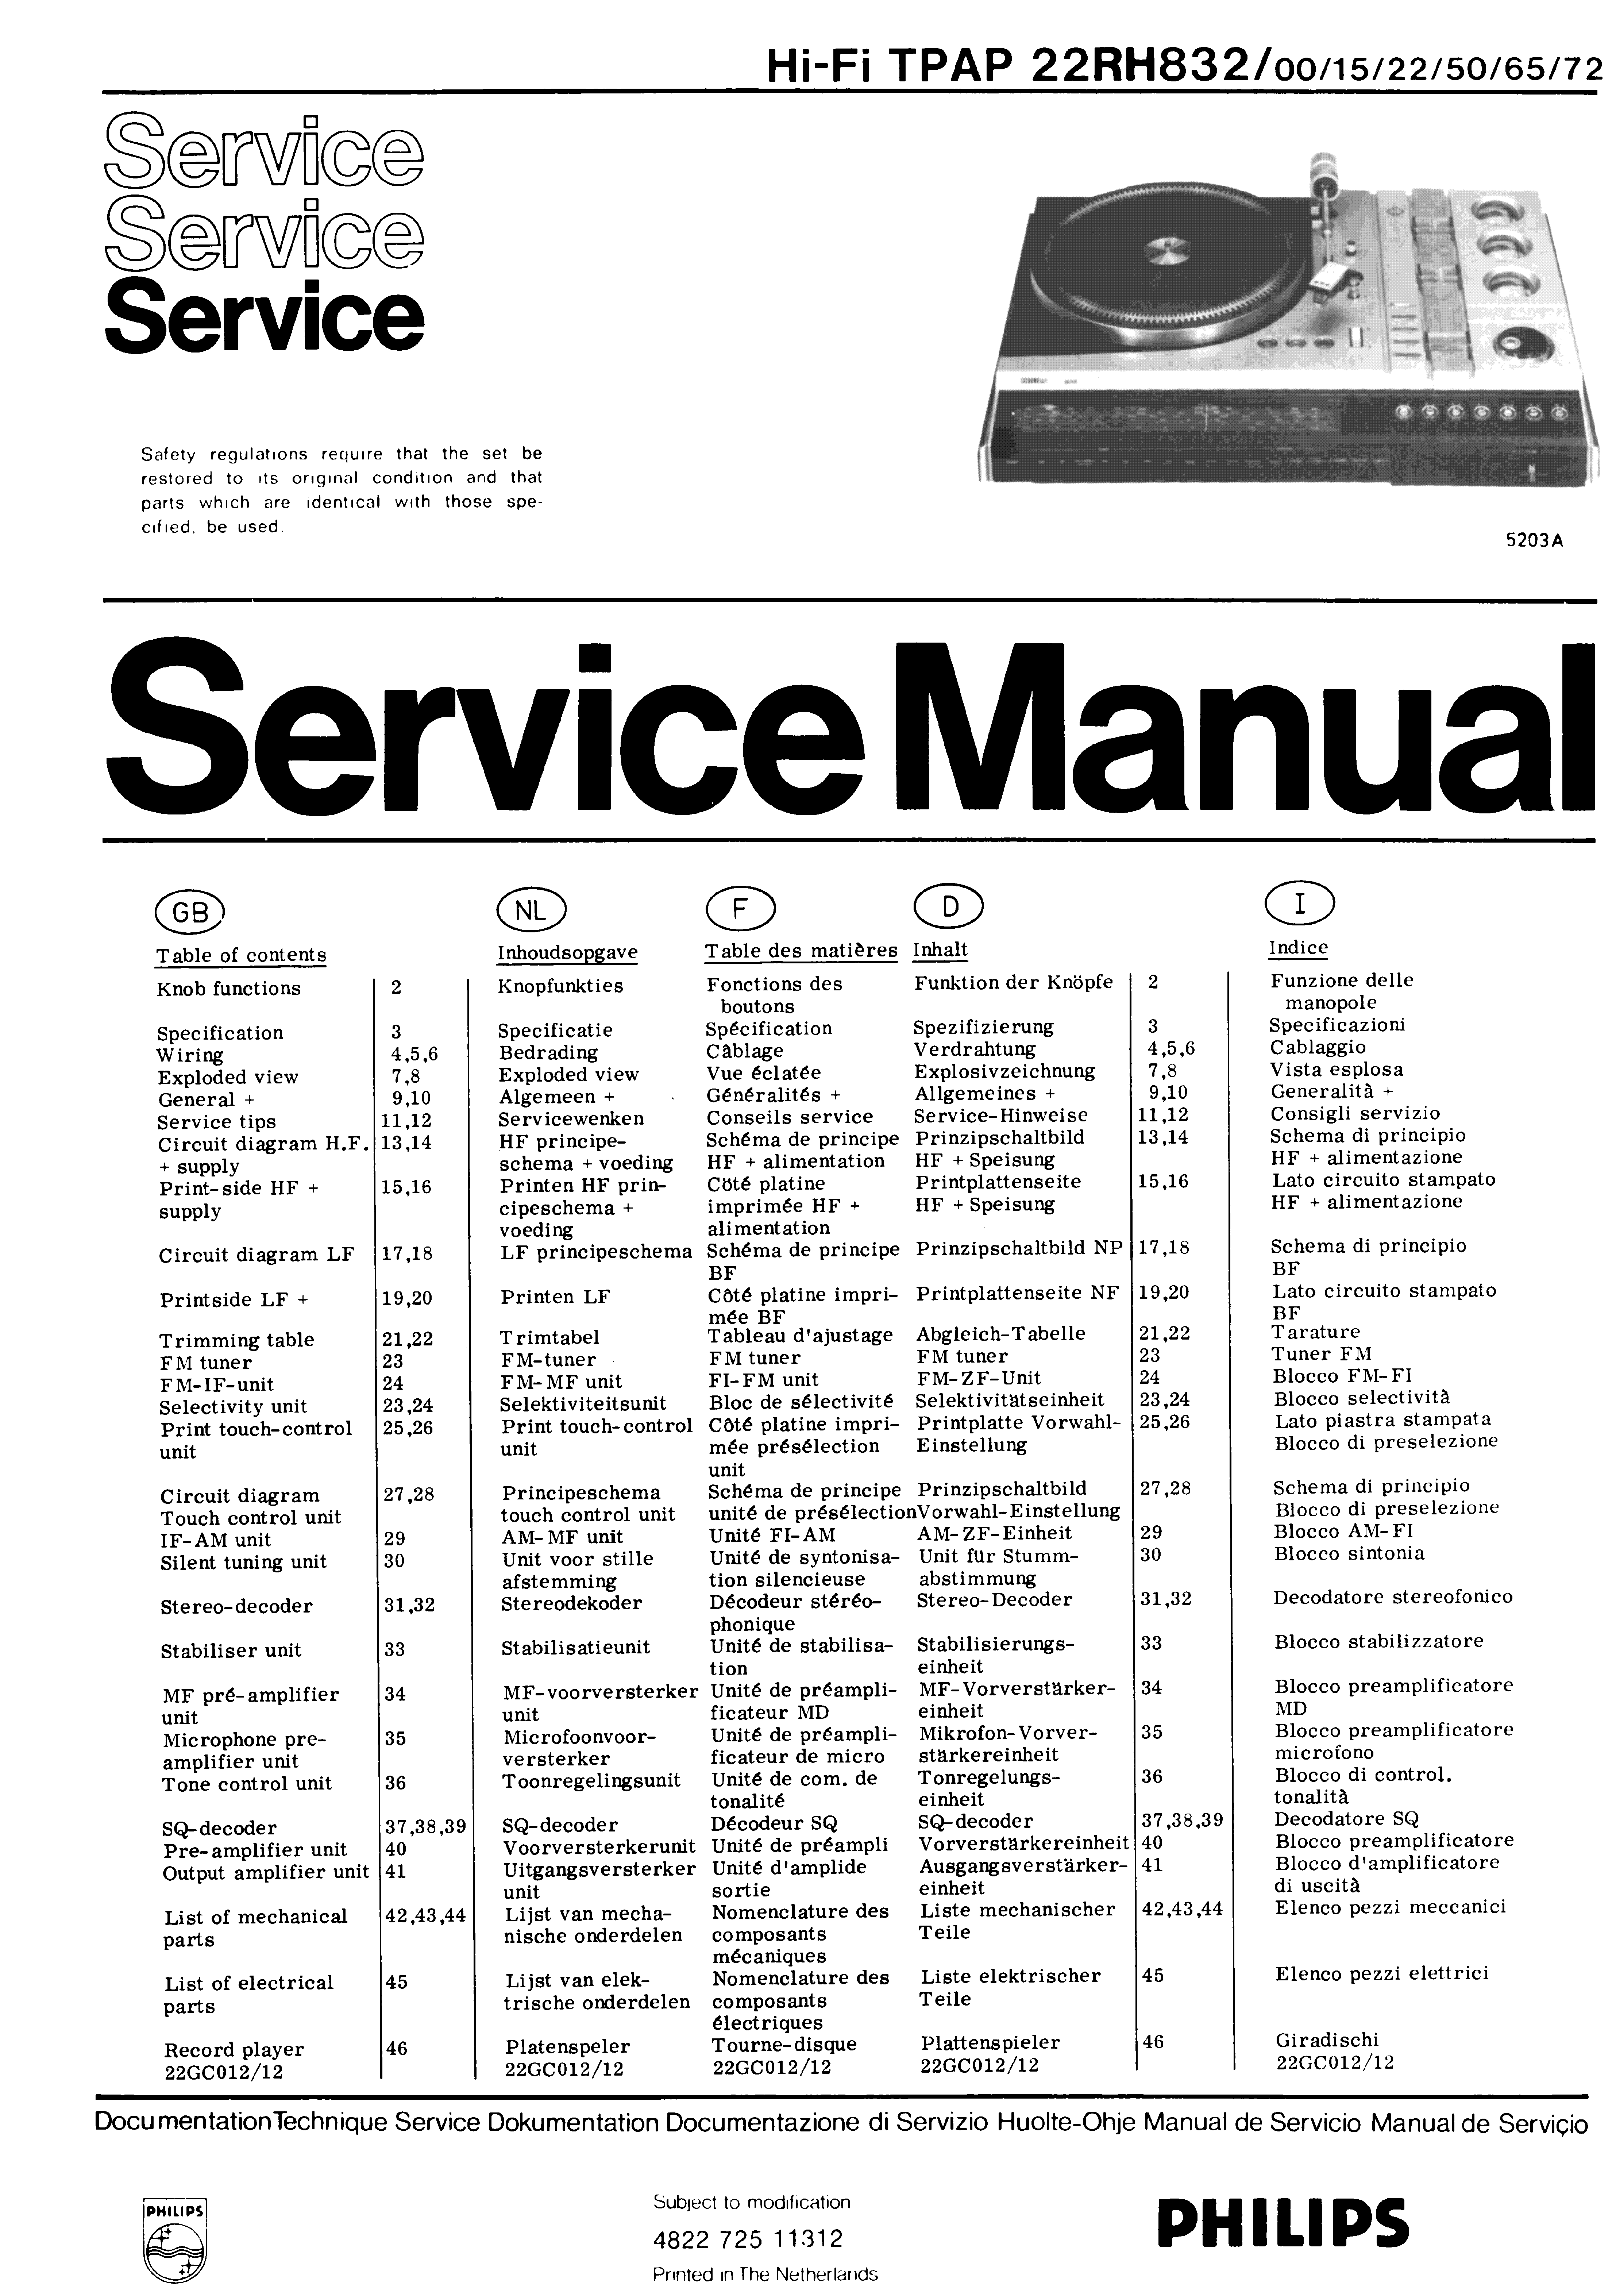 PHILIPS HIFI TPAP 22RH832 SM service manual (1st page)